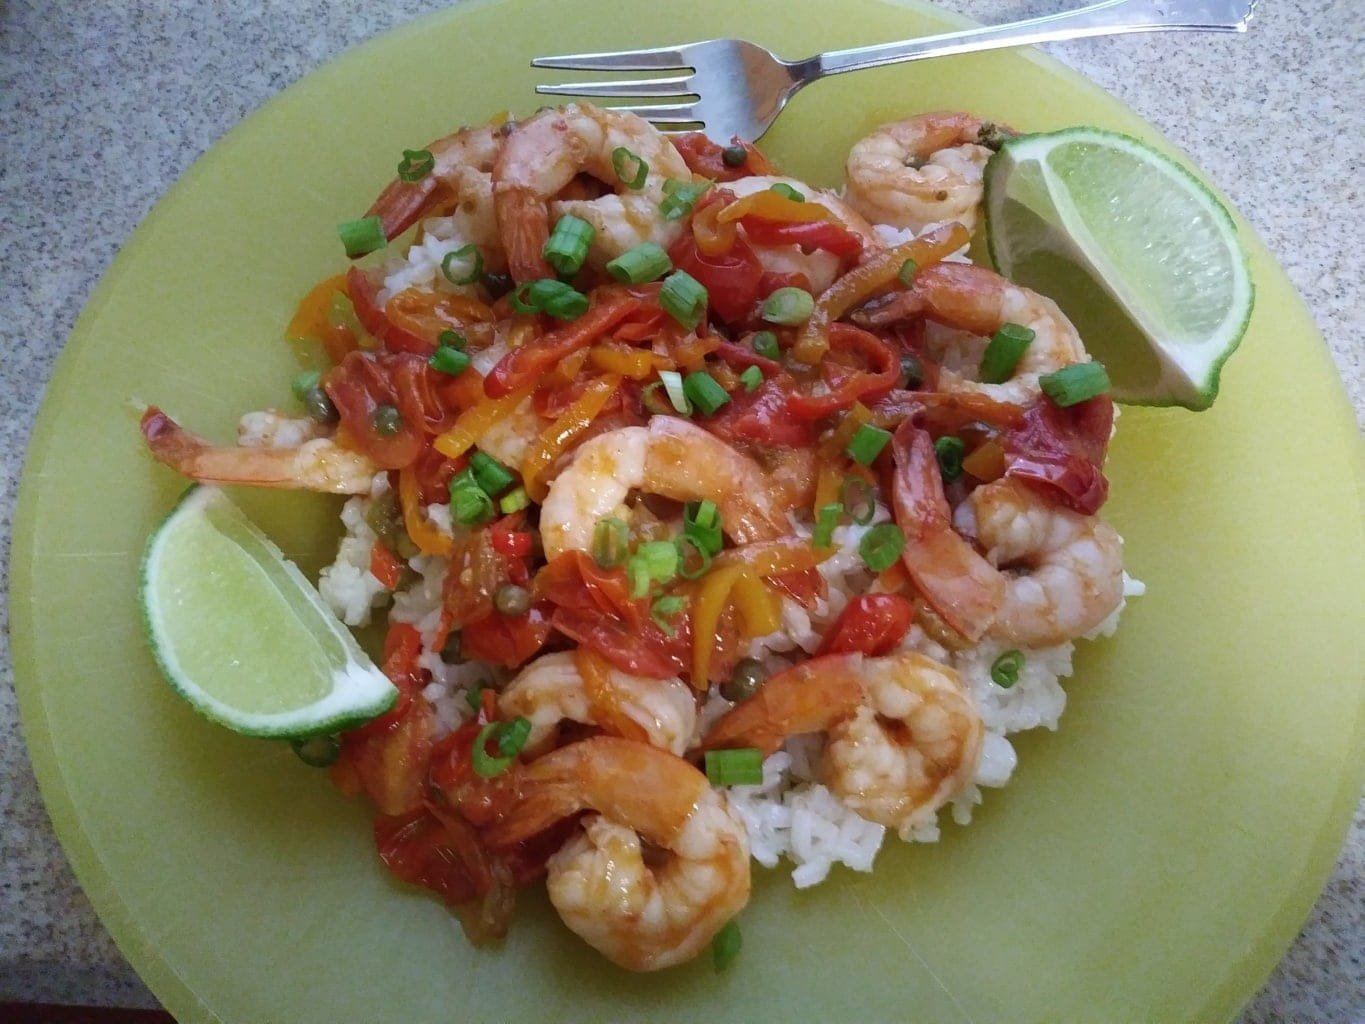 Spicy Veracruz Shrimp with Brown Rice